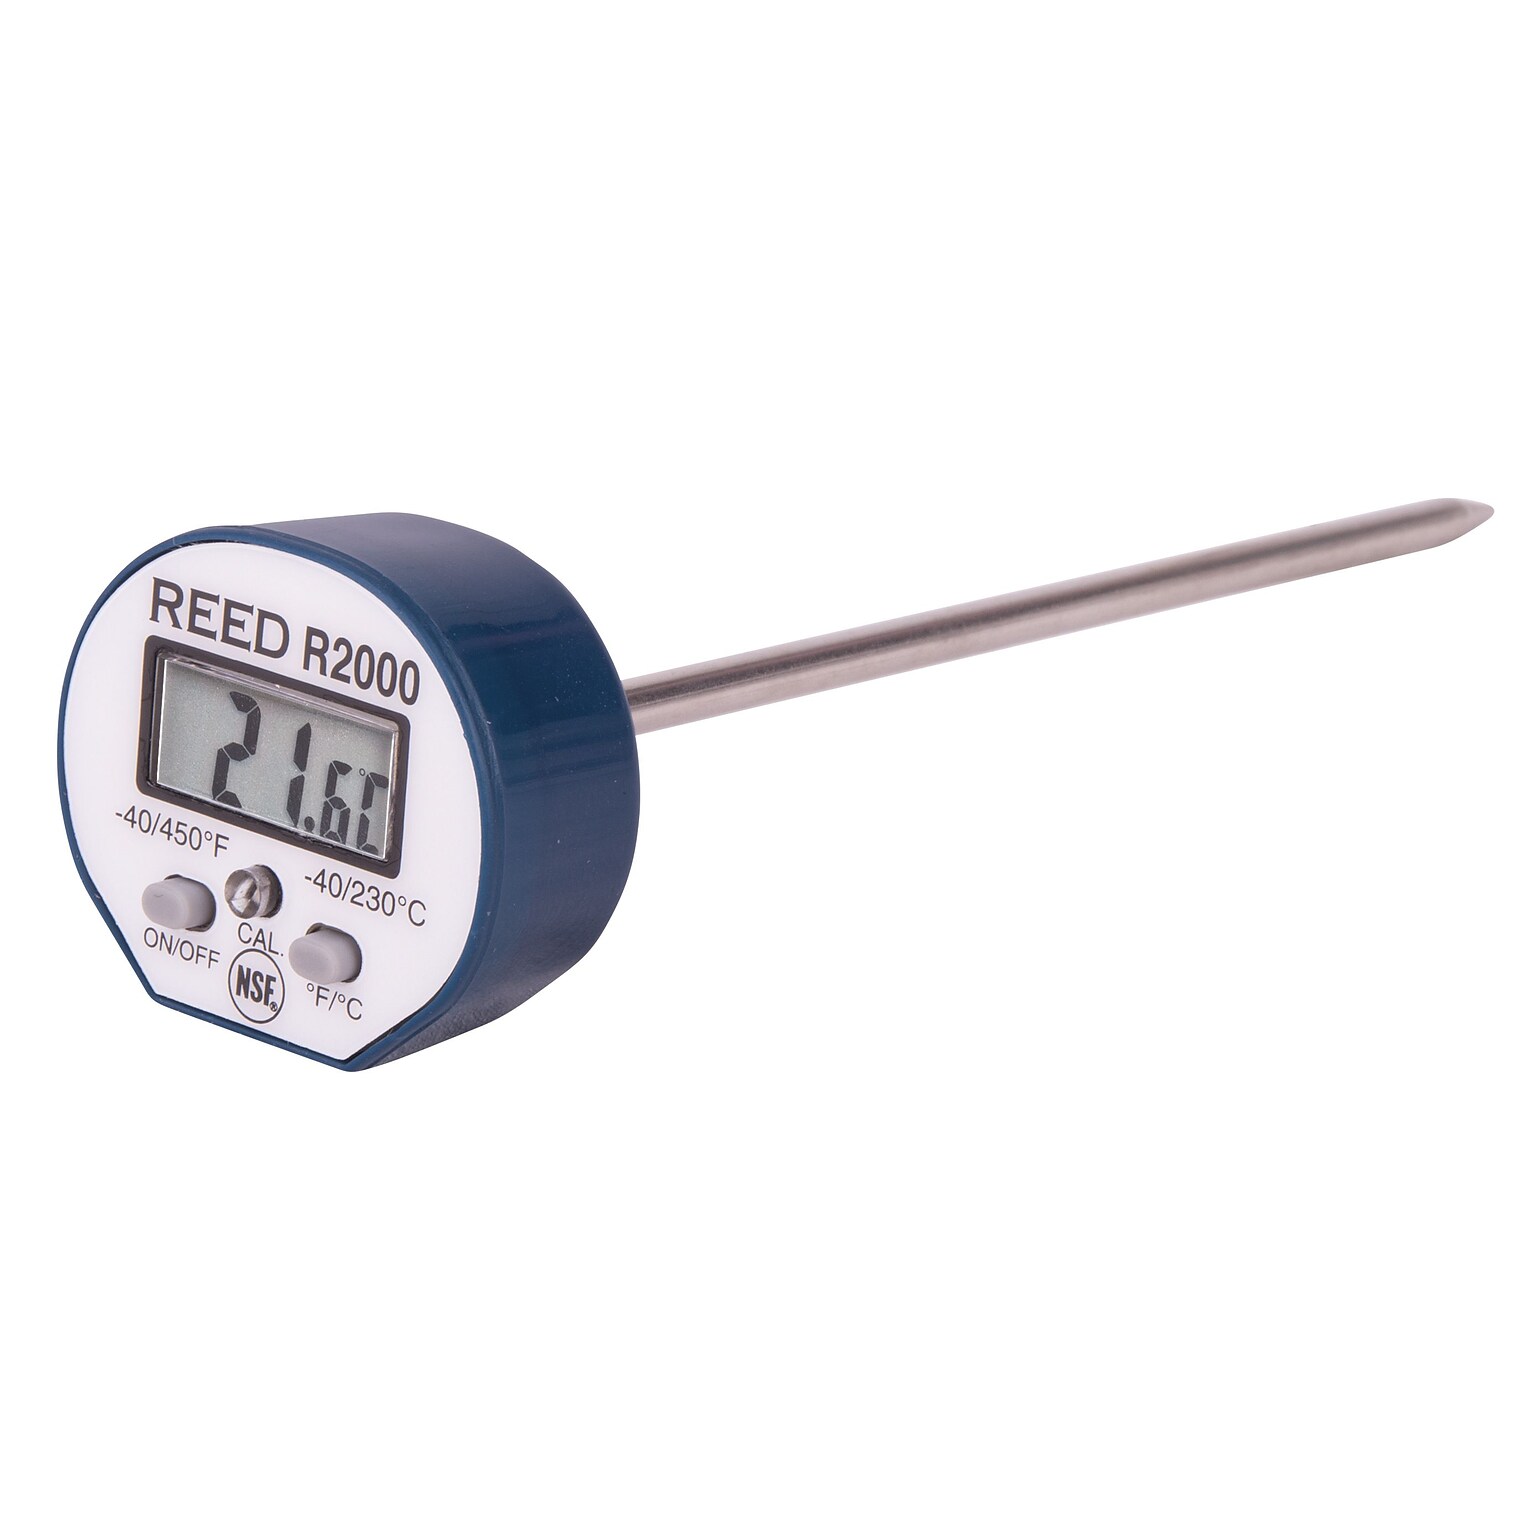 REED R2000 Stainless Steel Digital Stem Thermometer, -40 to 450degF (-40 to 230degC), Waterproof (R2000)